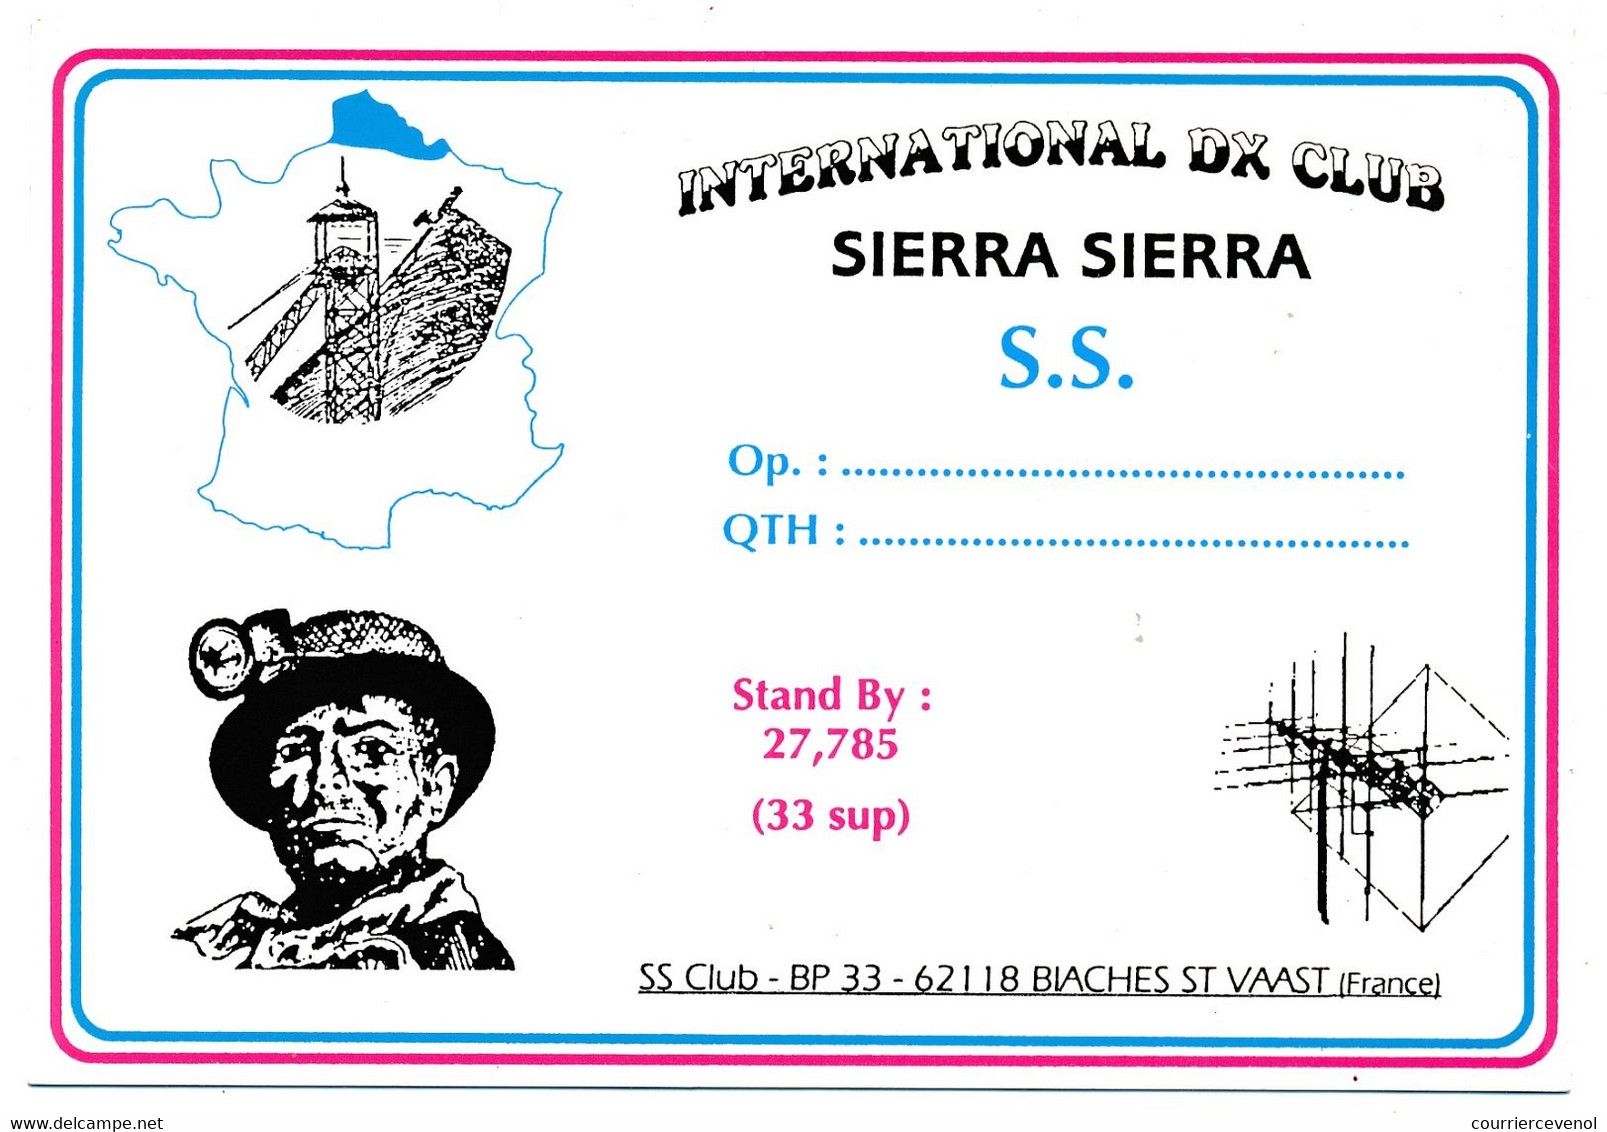 FRANCE - Carte Radio-amateur - FRANCE / BIACHES ST VAAST - International DX Club Sierra Sierra - Neuve - Amateurfunk